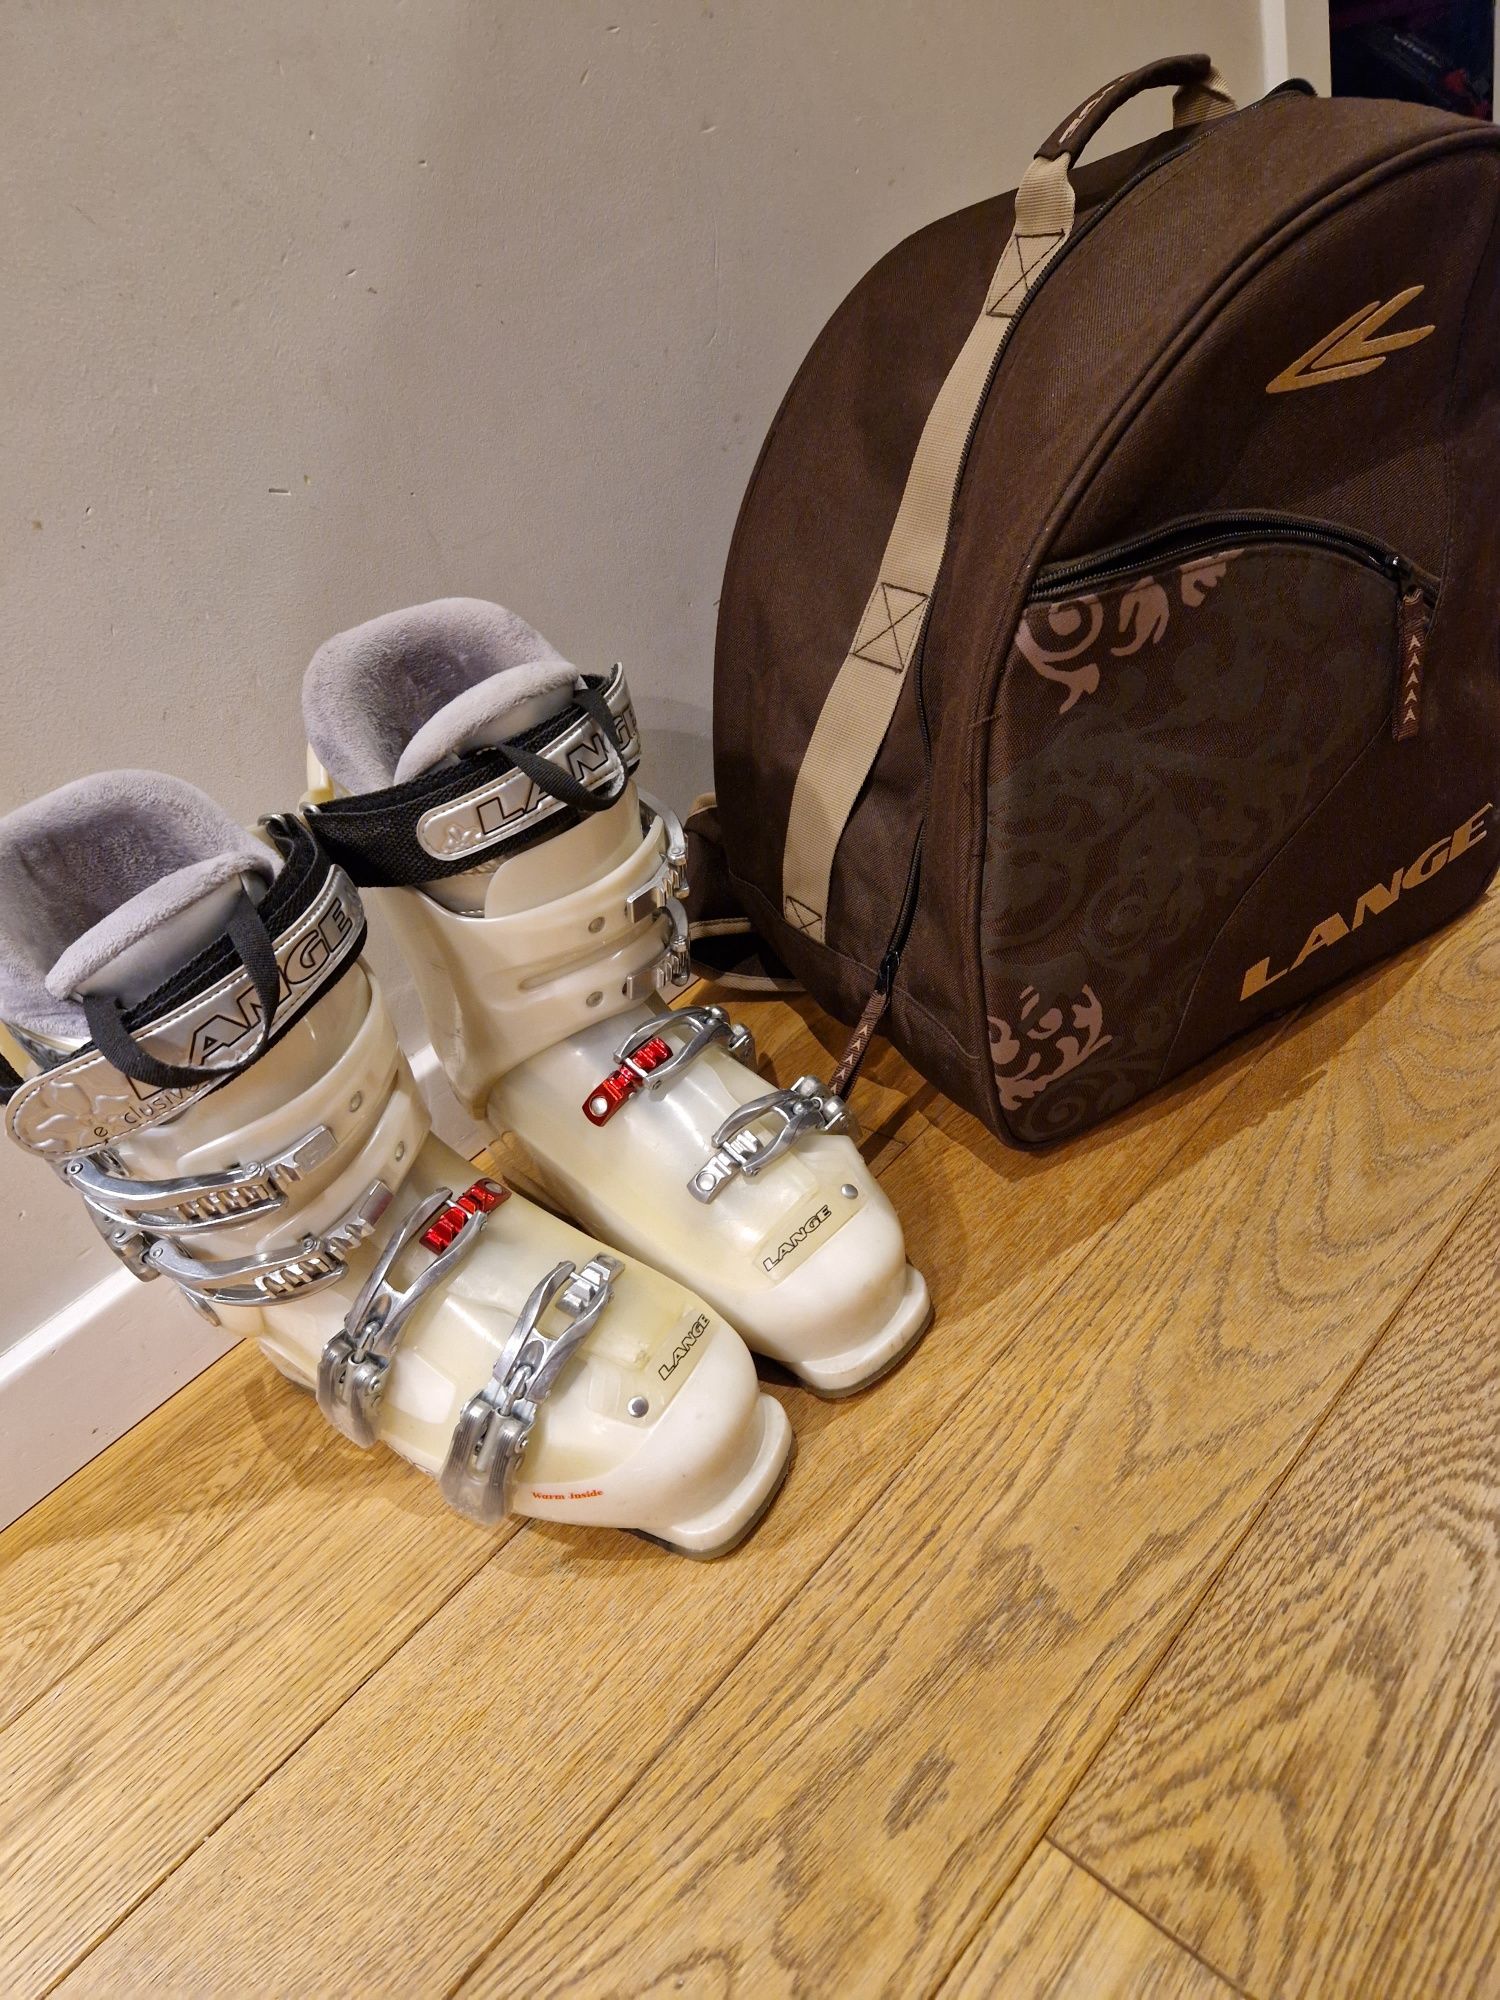 Buty narciarskie Lange venus 85 rozmiar 25.5